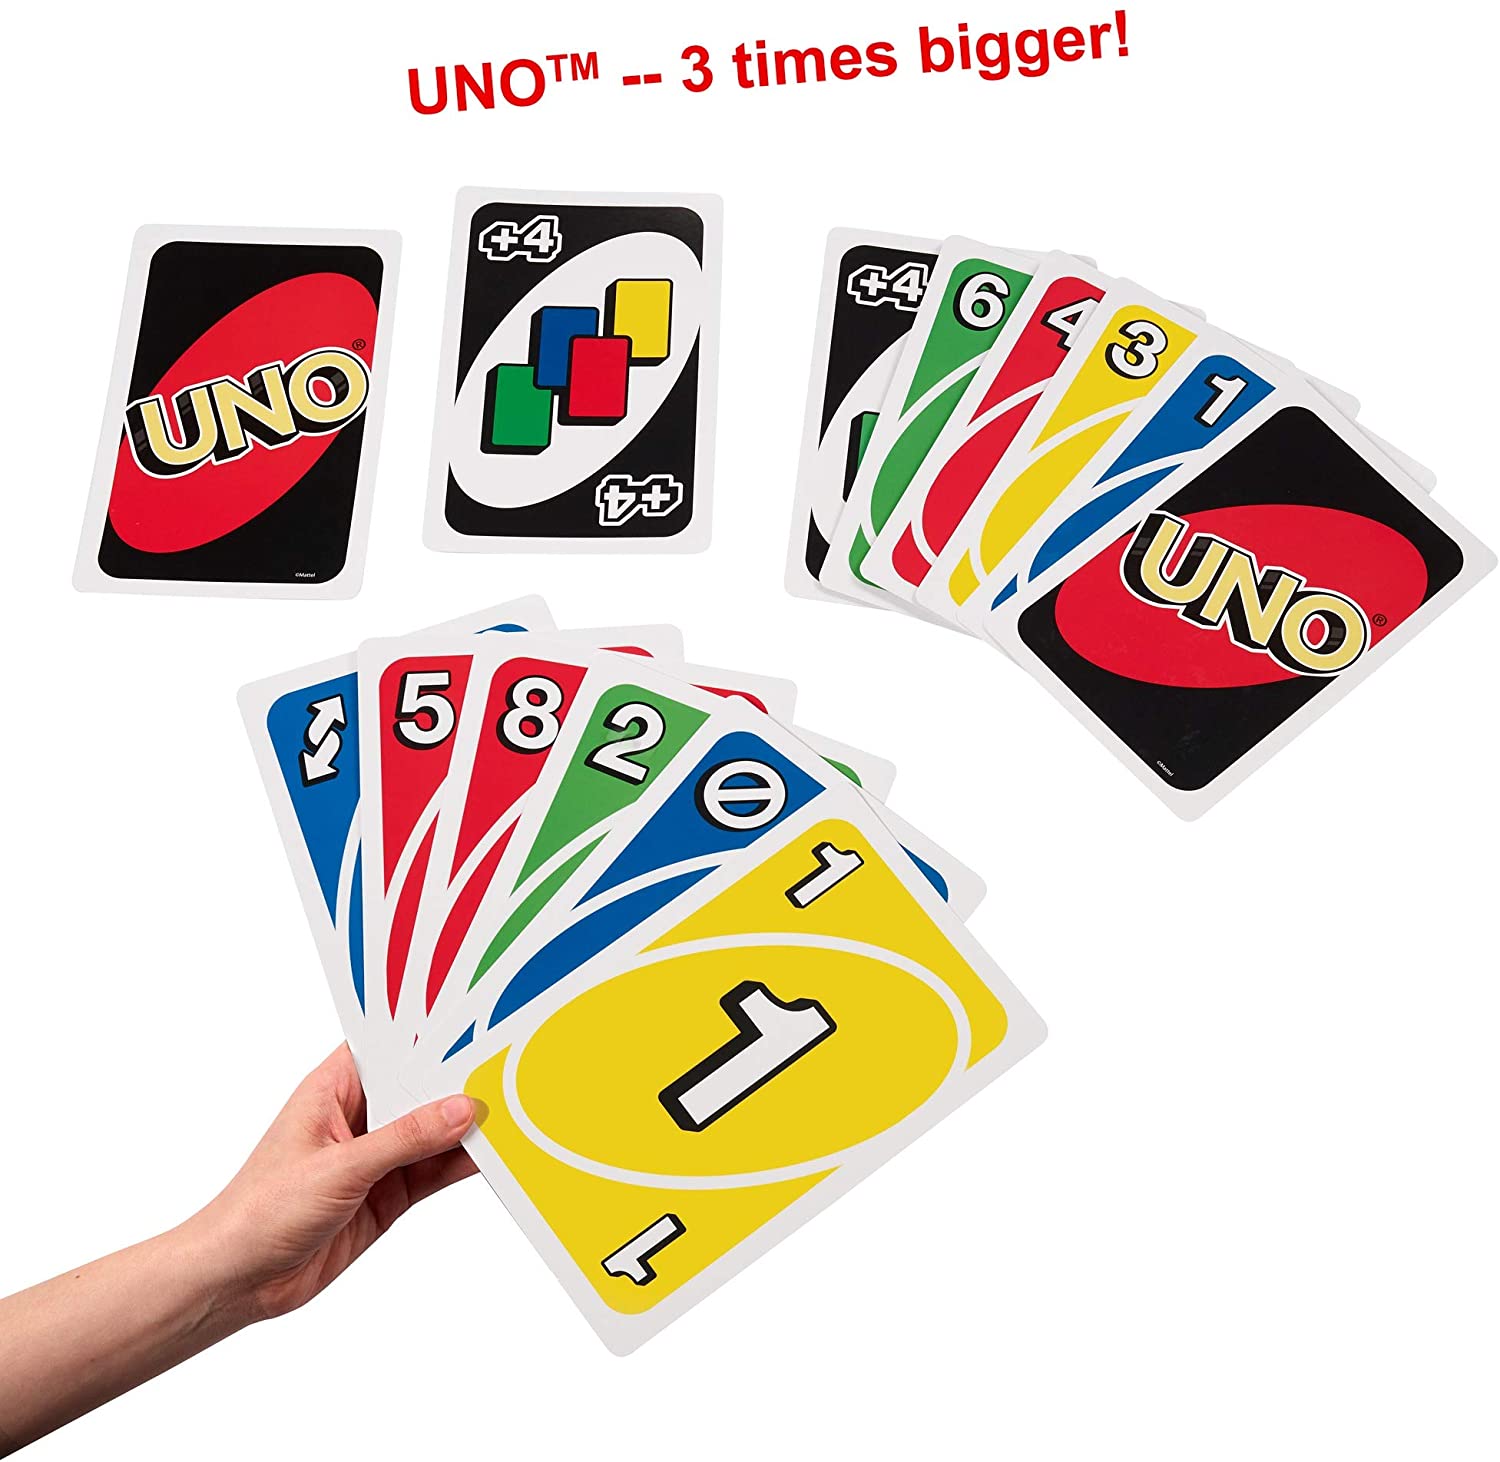 Giant Uno Cards 3 Times Bigger | GeekyHuman.com